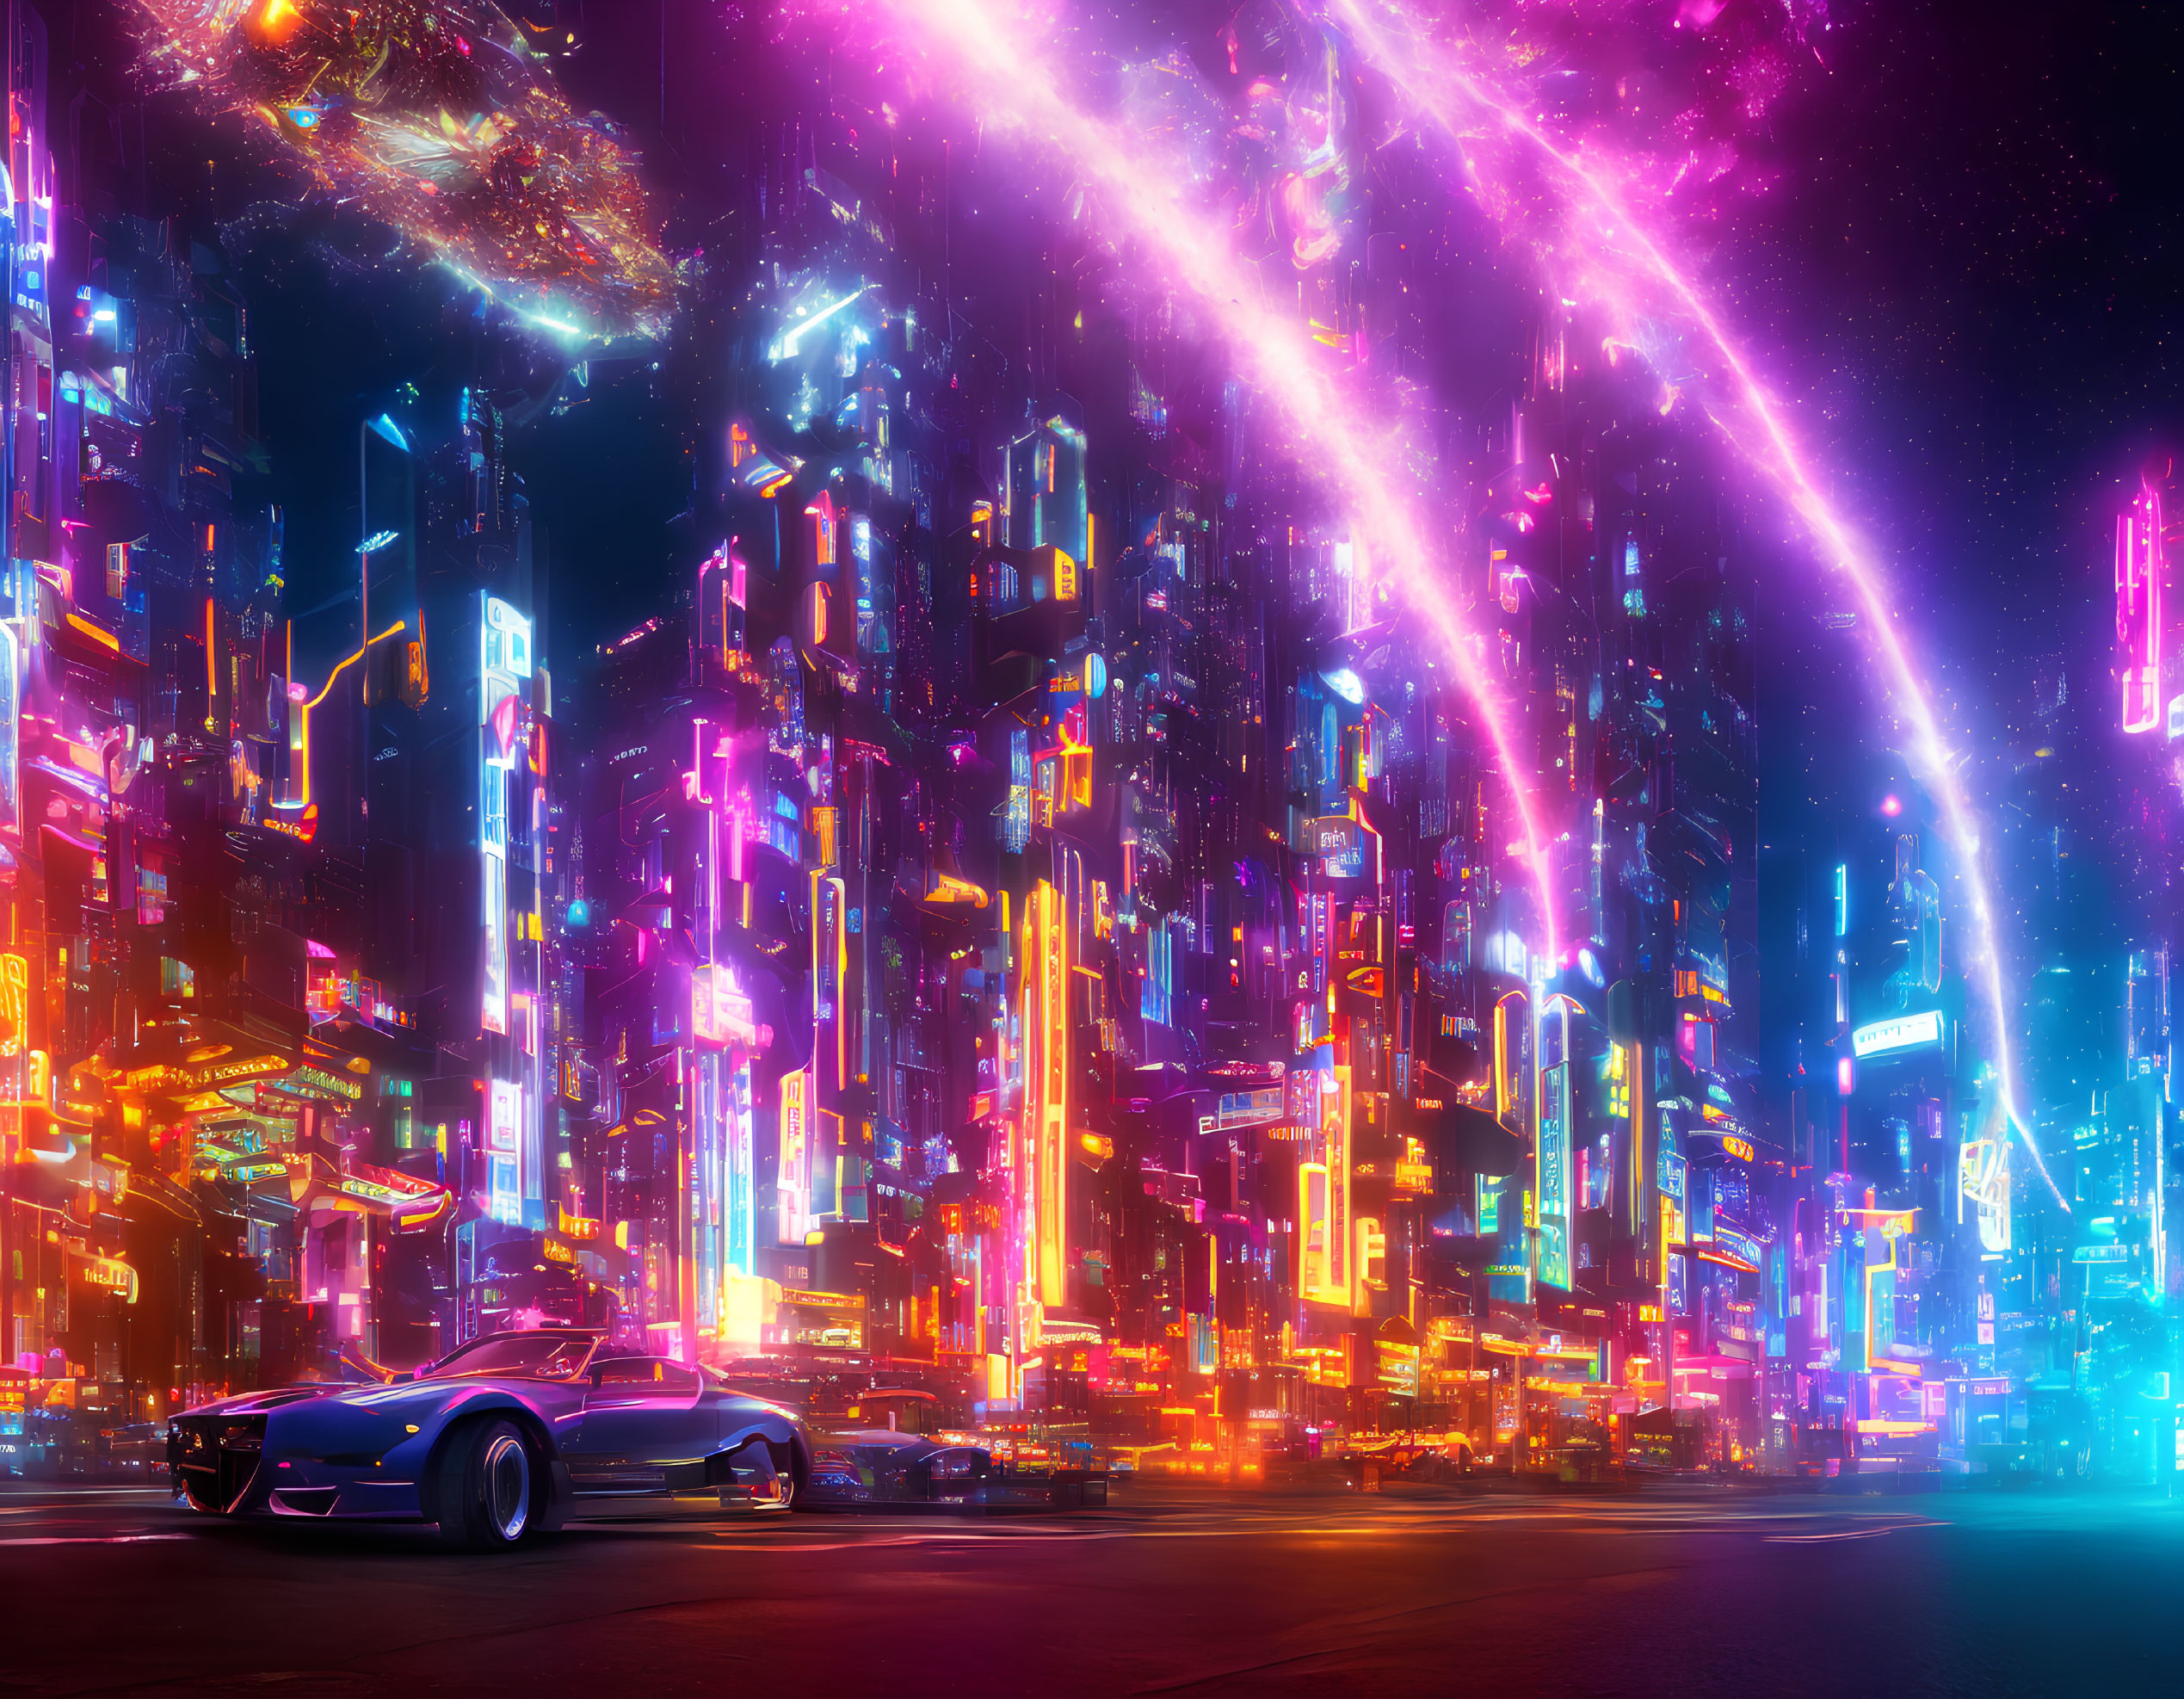 Futuristic neon-lit cityscape with skyscrapers and cosmic event